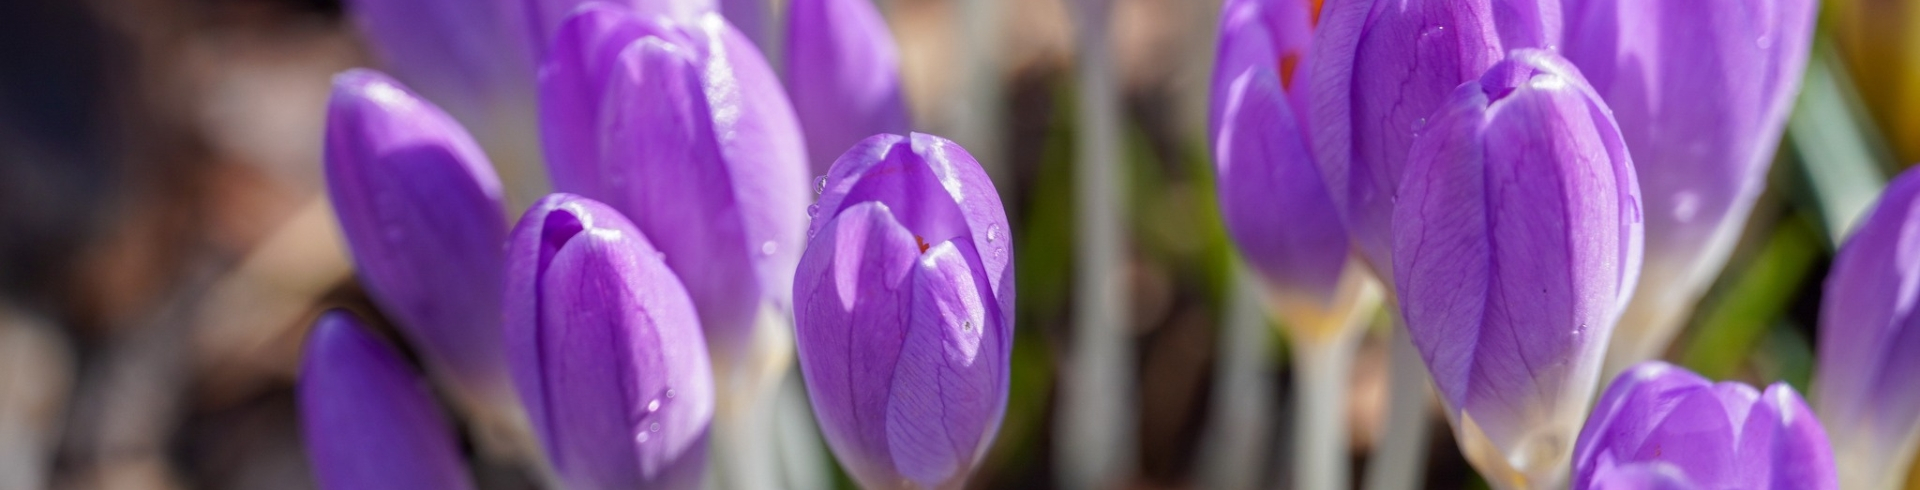 Violeti ziedi - pavasara krokusi 